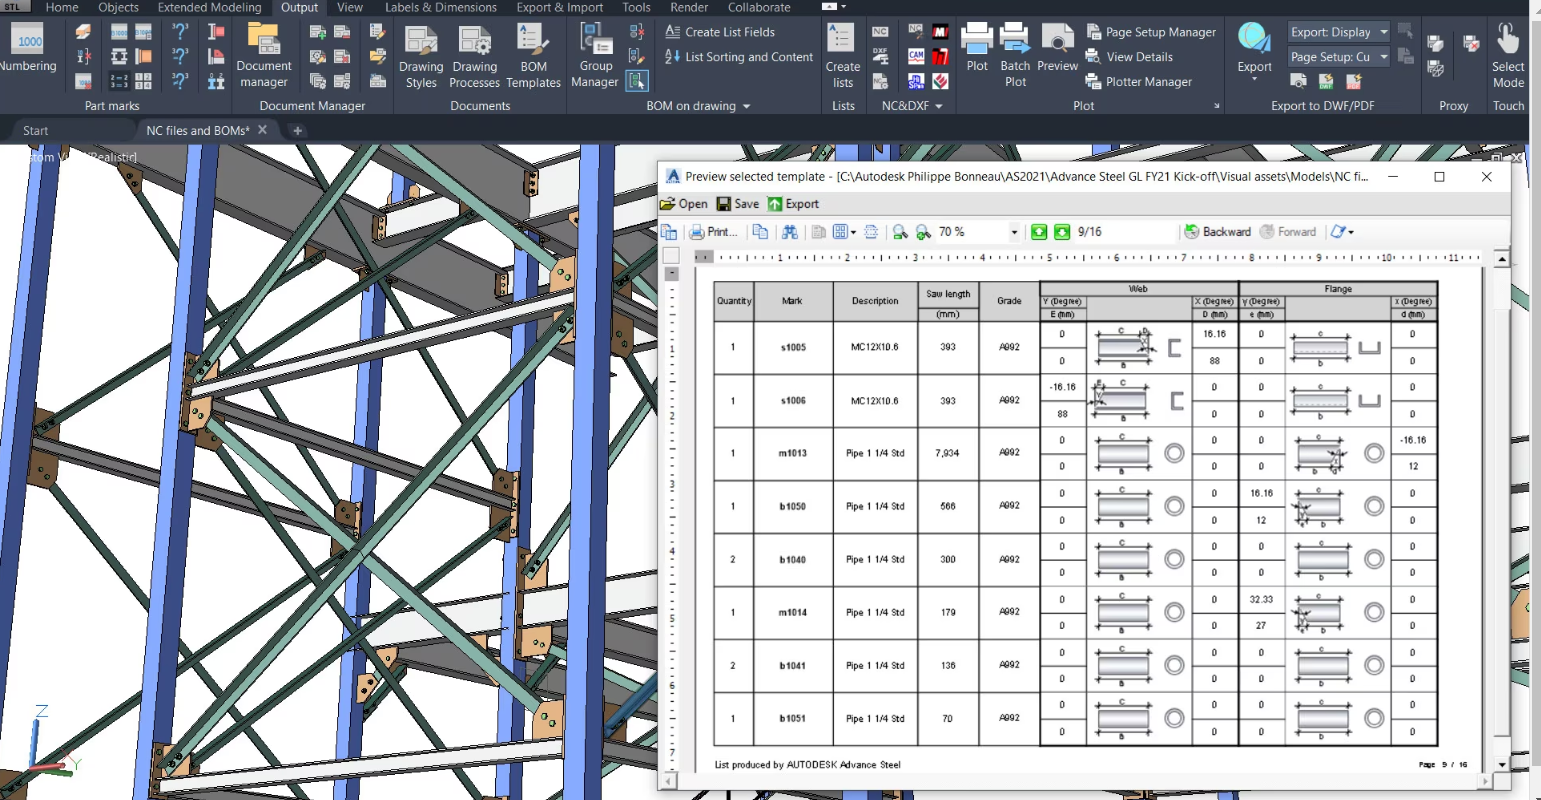 Screenshot of Autodesk Advance Steel software